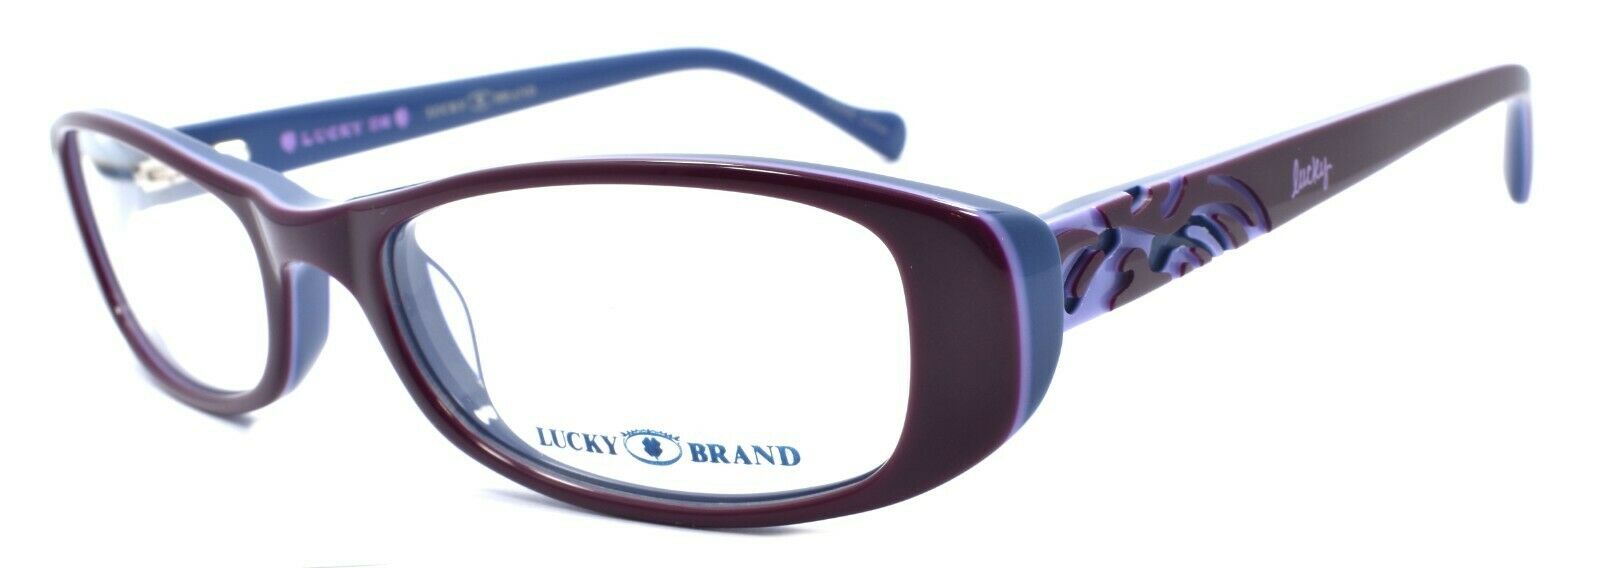 1-LUCKY BRAND Spark Plug Kids Girls Eyeglasses Frames 49-16-130 Purple + CASE-751286246193-IKSpecs